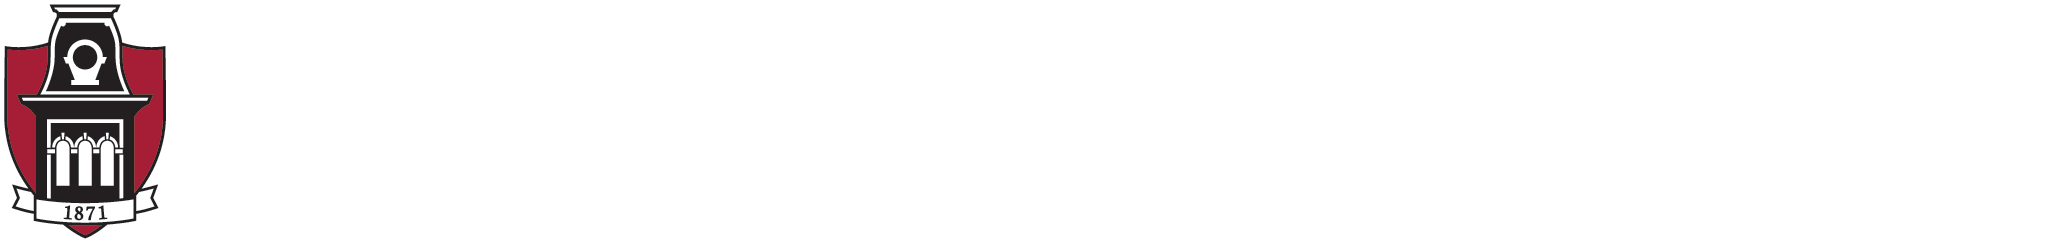 Bookstore Logo - The University Bookstore - U of A Bookstore